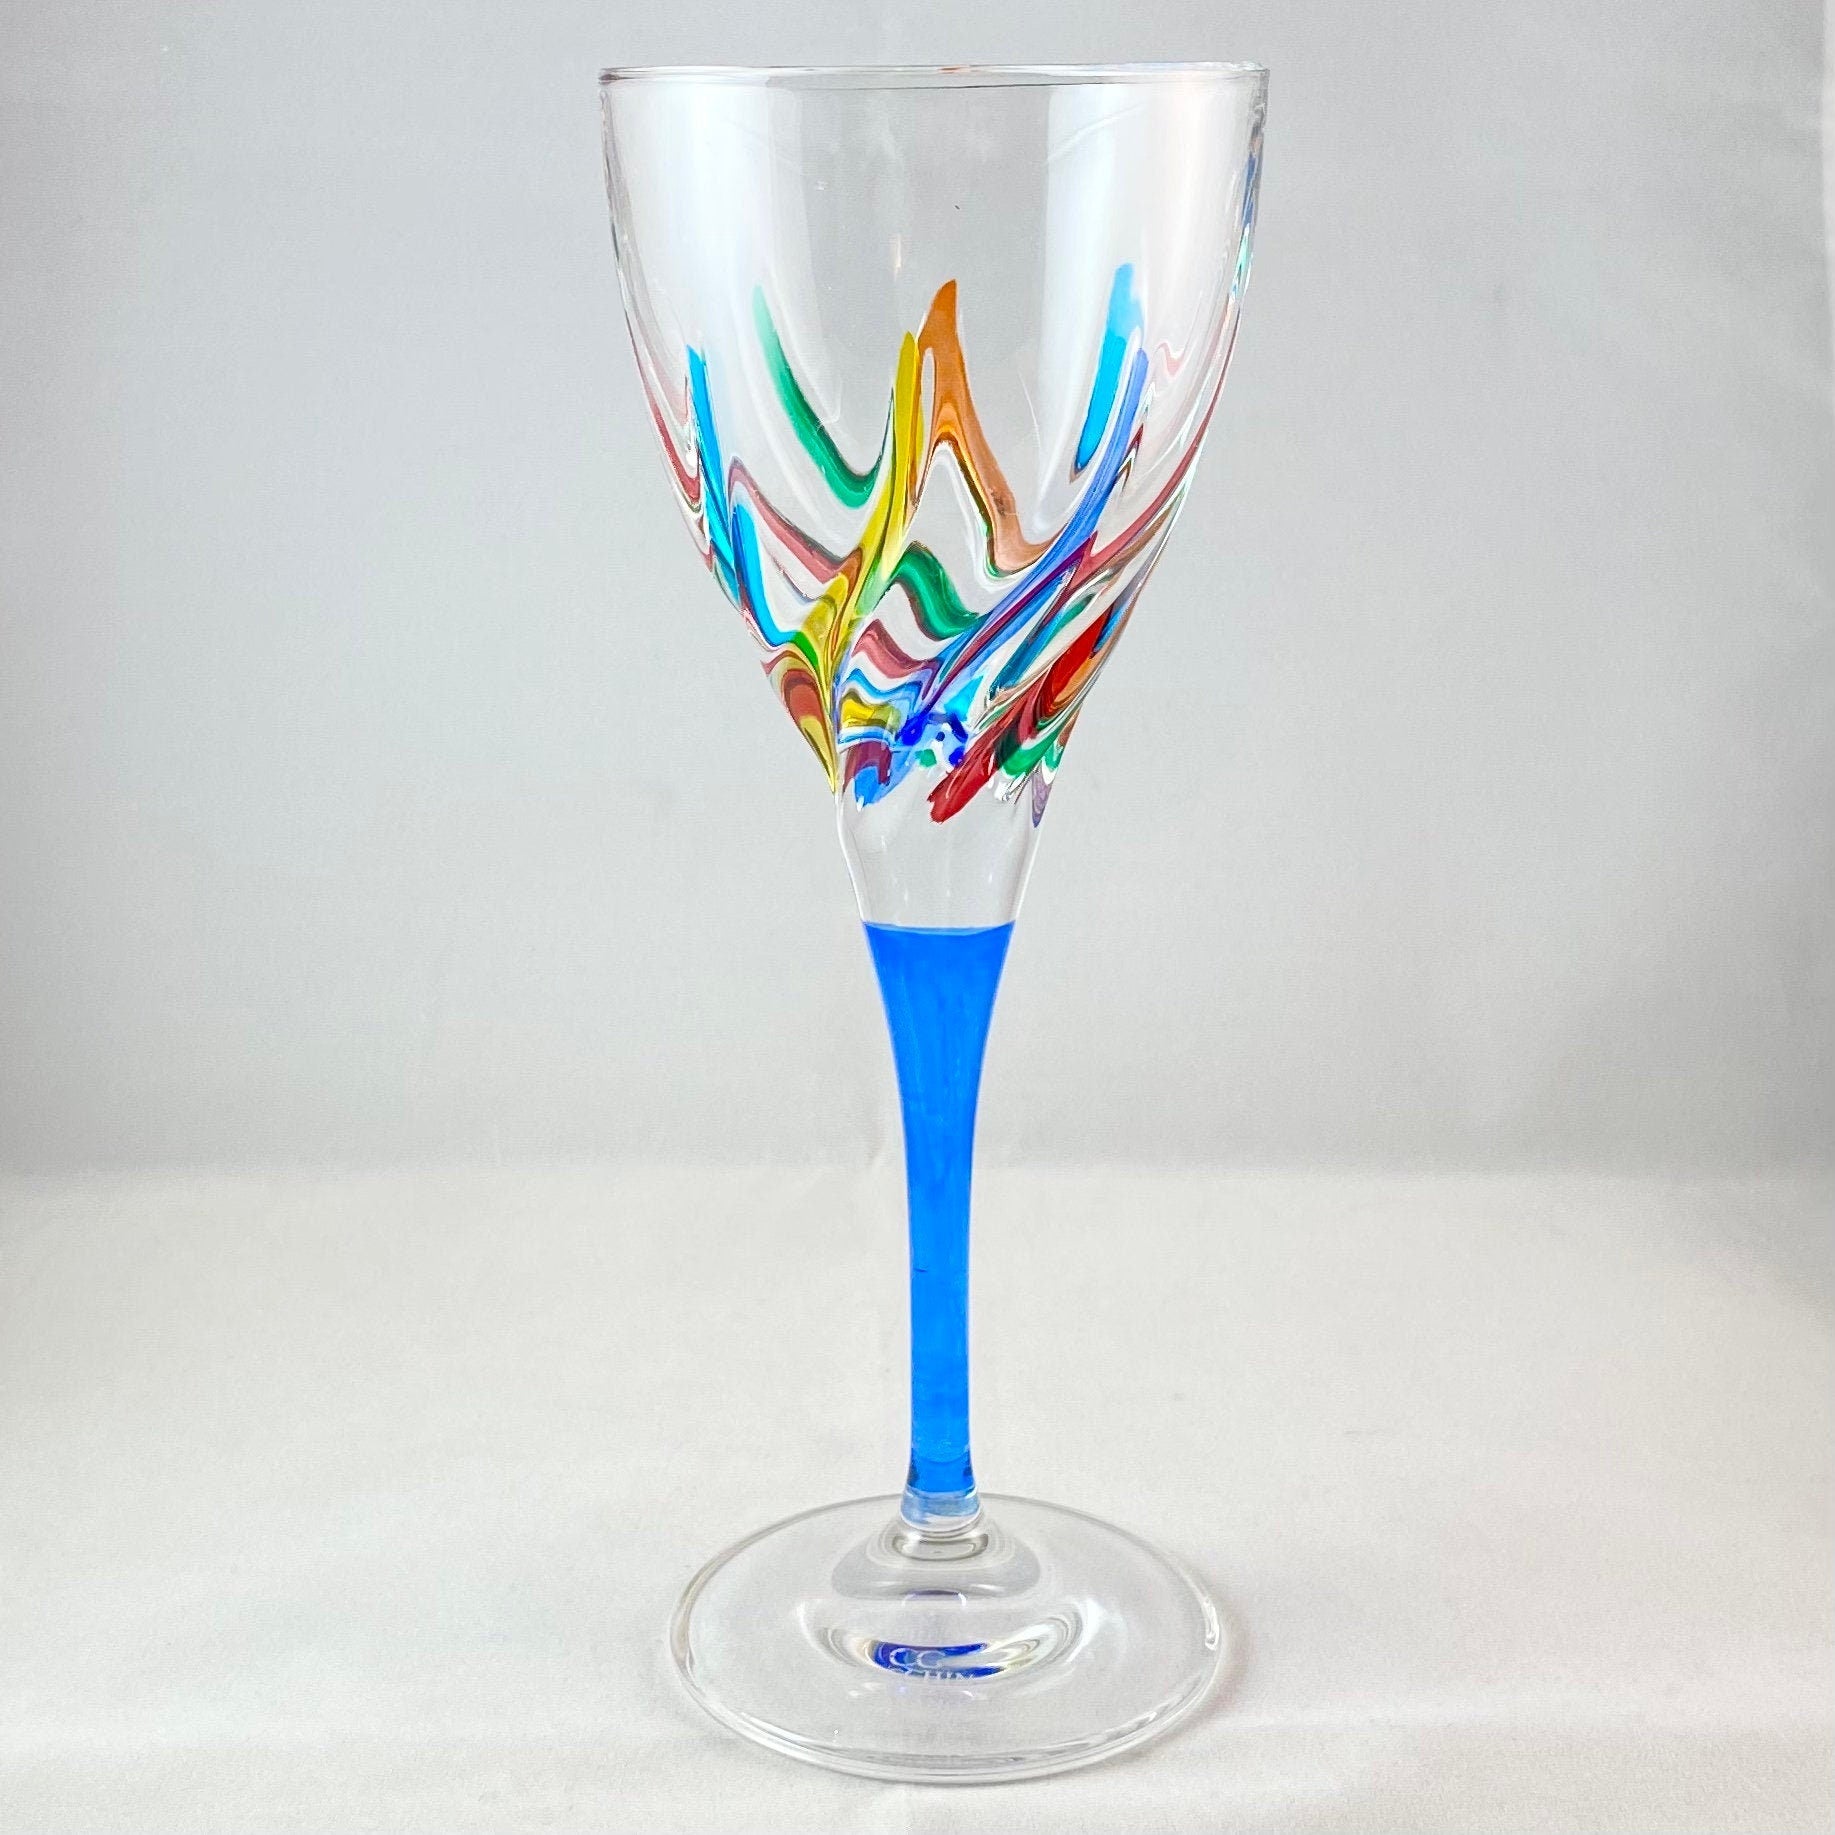 Blue Stem Venetian Glass Trix Wine Glass - Handmade in Italy, Colorful Murano Glass